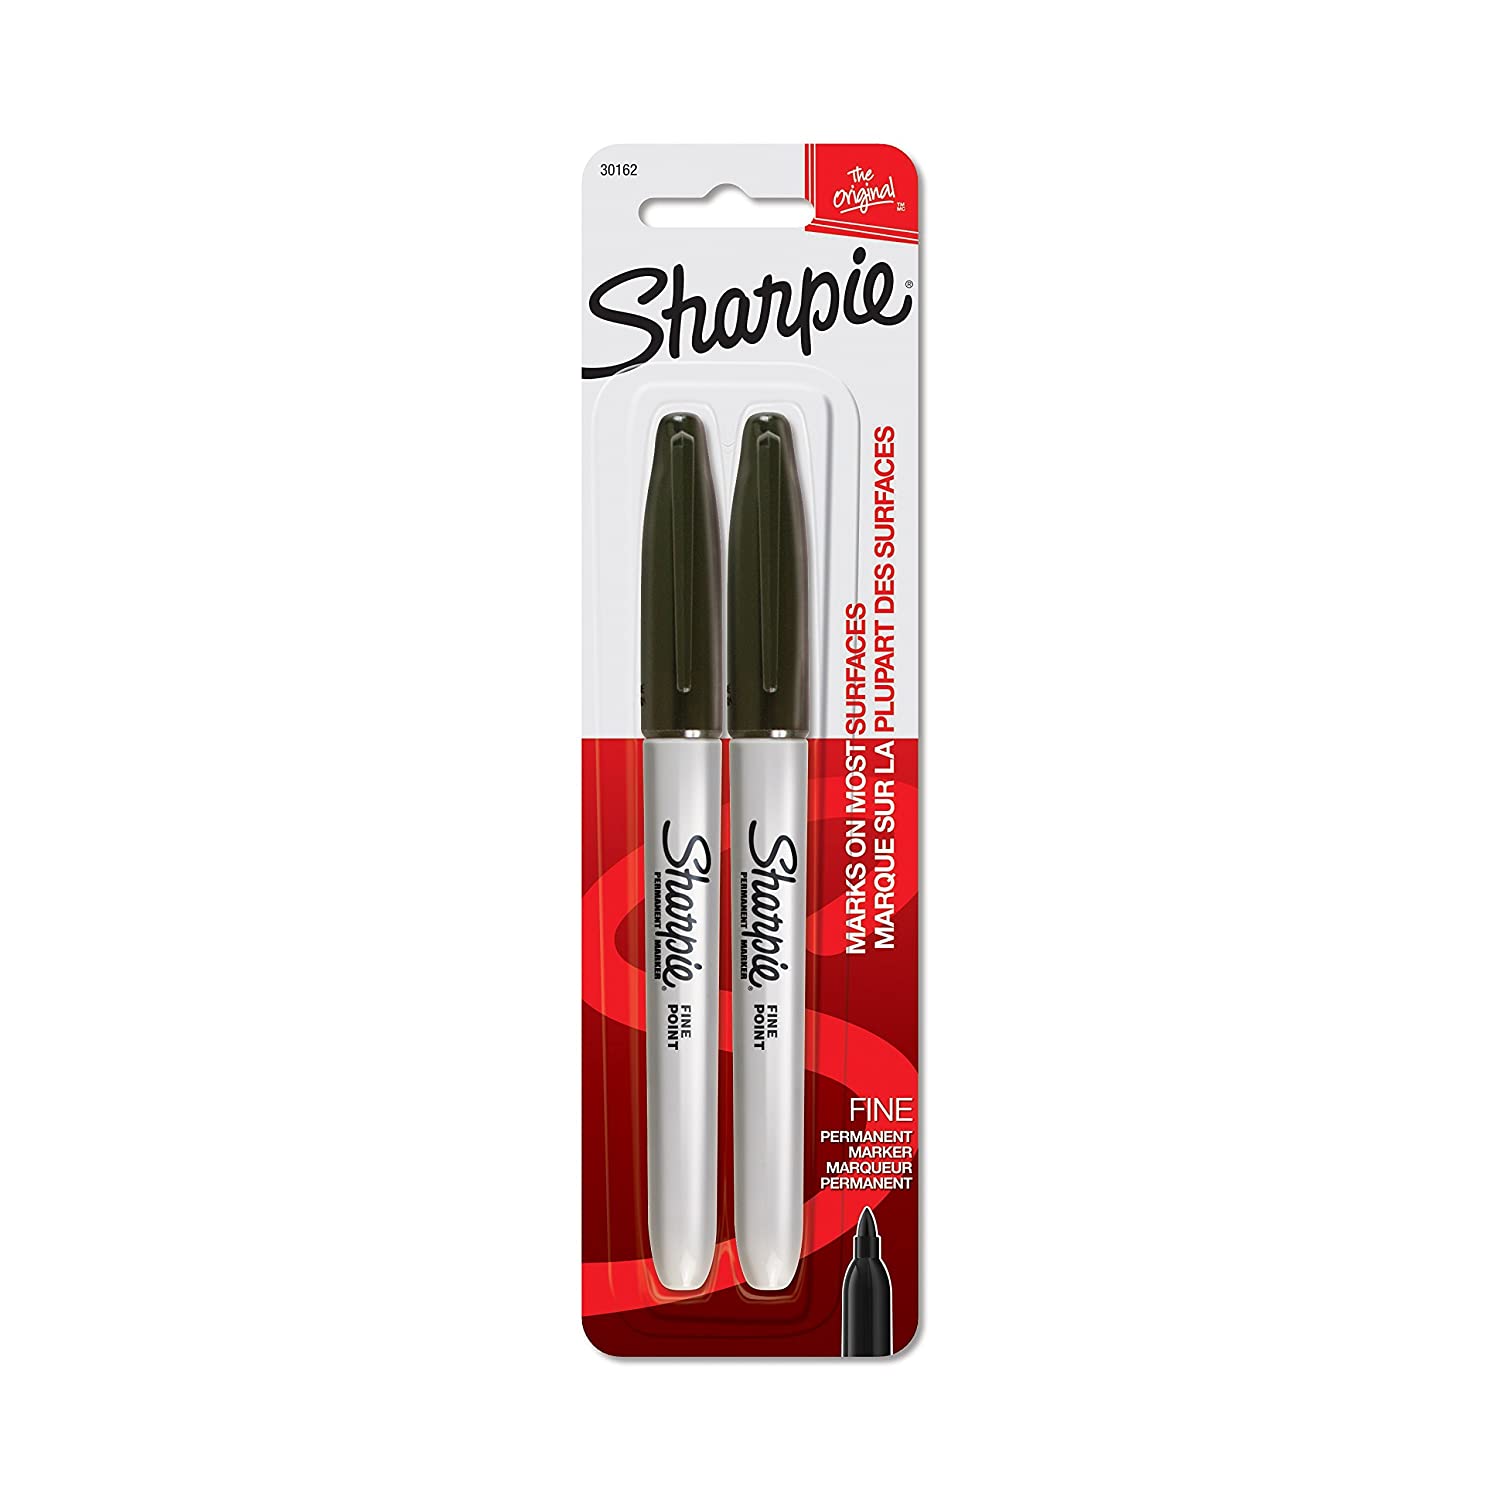 Sharpie Permanent Markers, Fine Point, Black, 2-Count